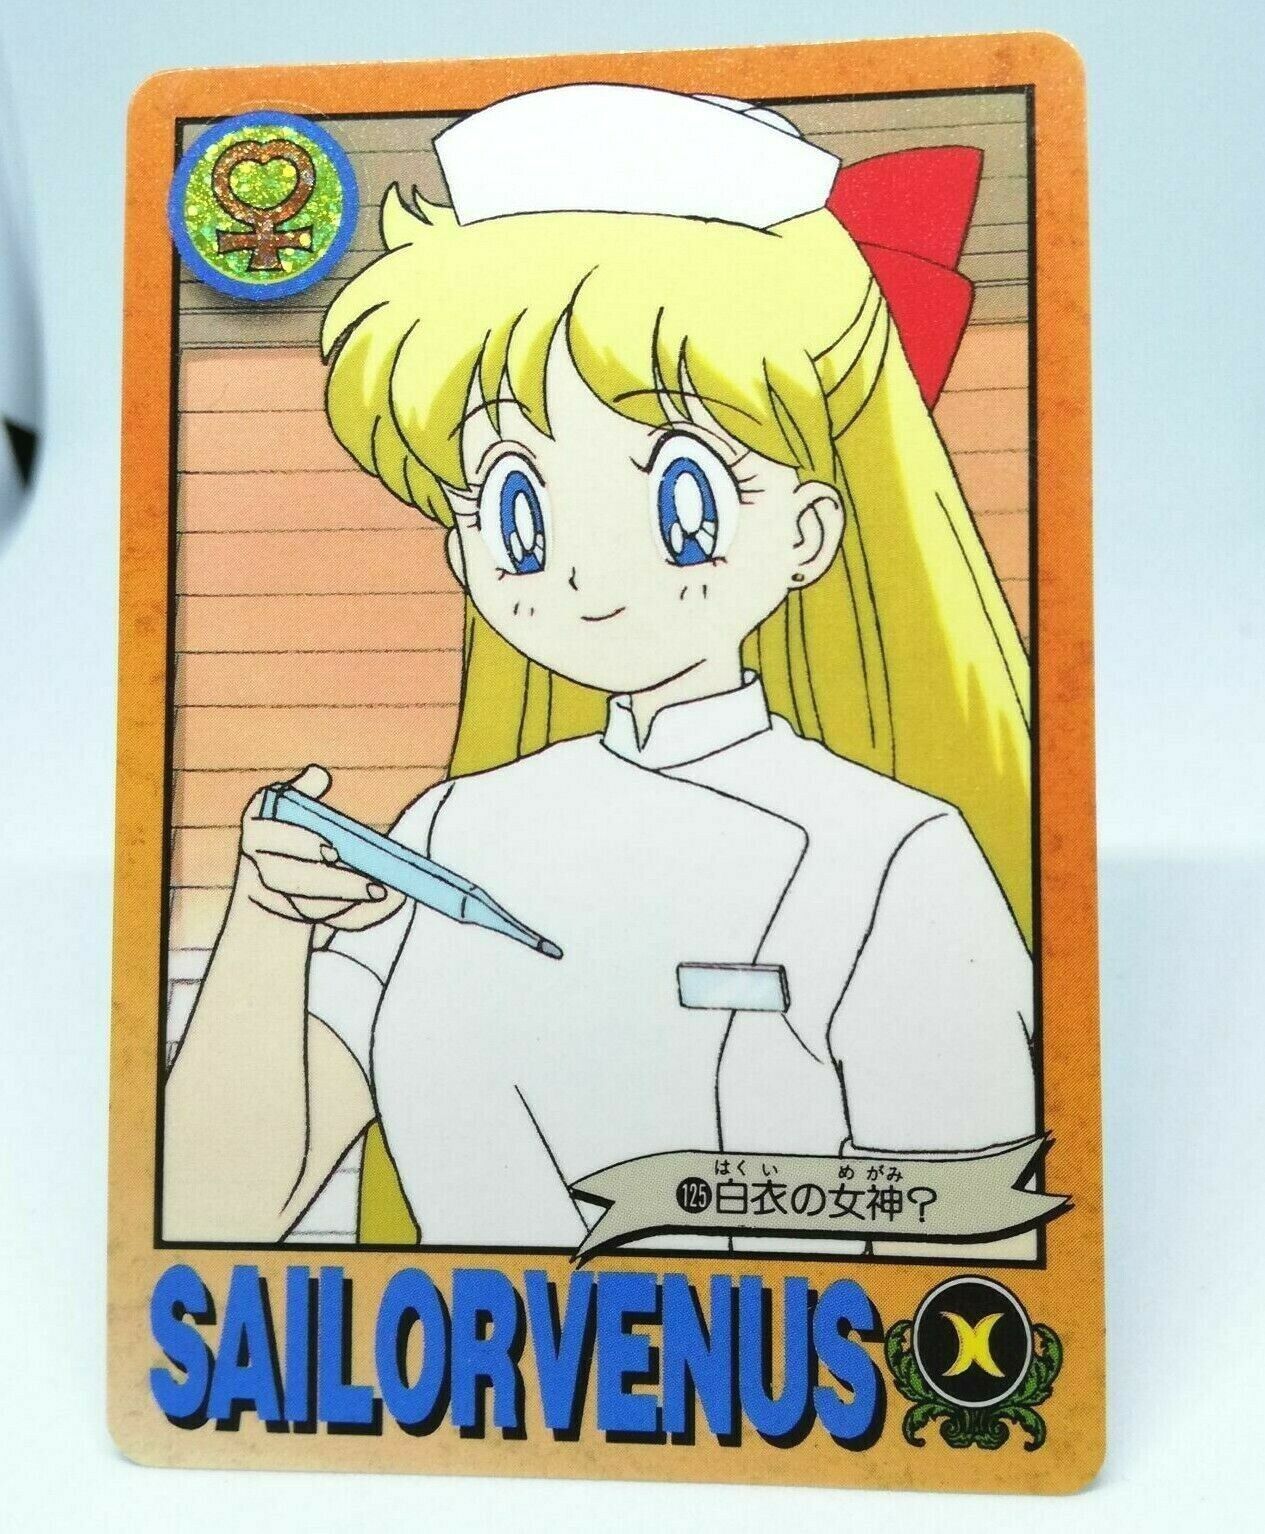 Sailor Venus from the Sailor Moon series as a nurse - Sailor Venus